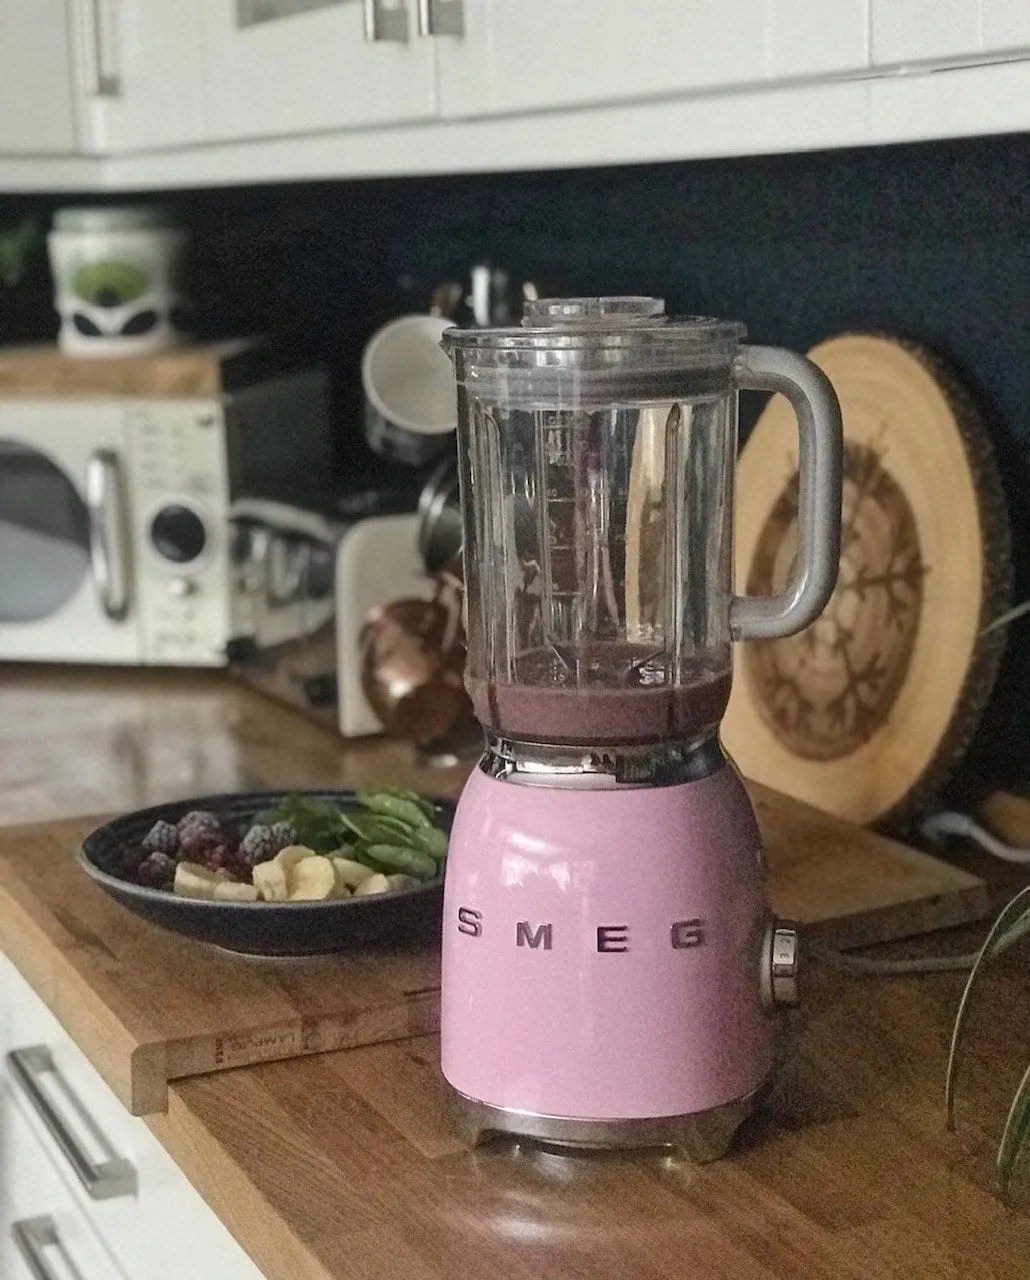 pink smeg food mixer on oak wooden worktops in the kitchen